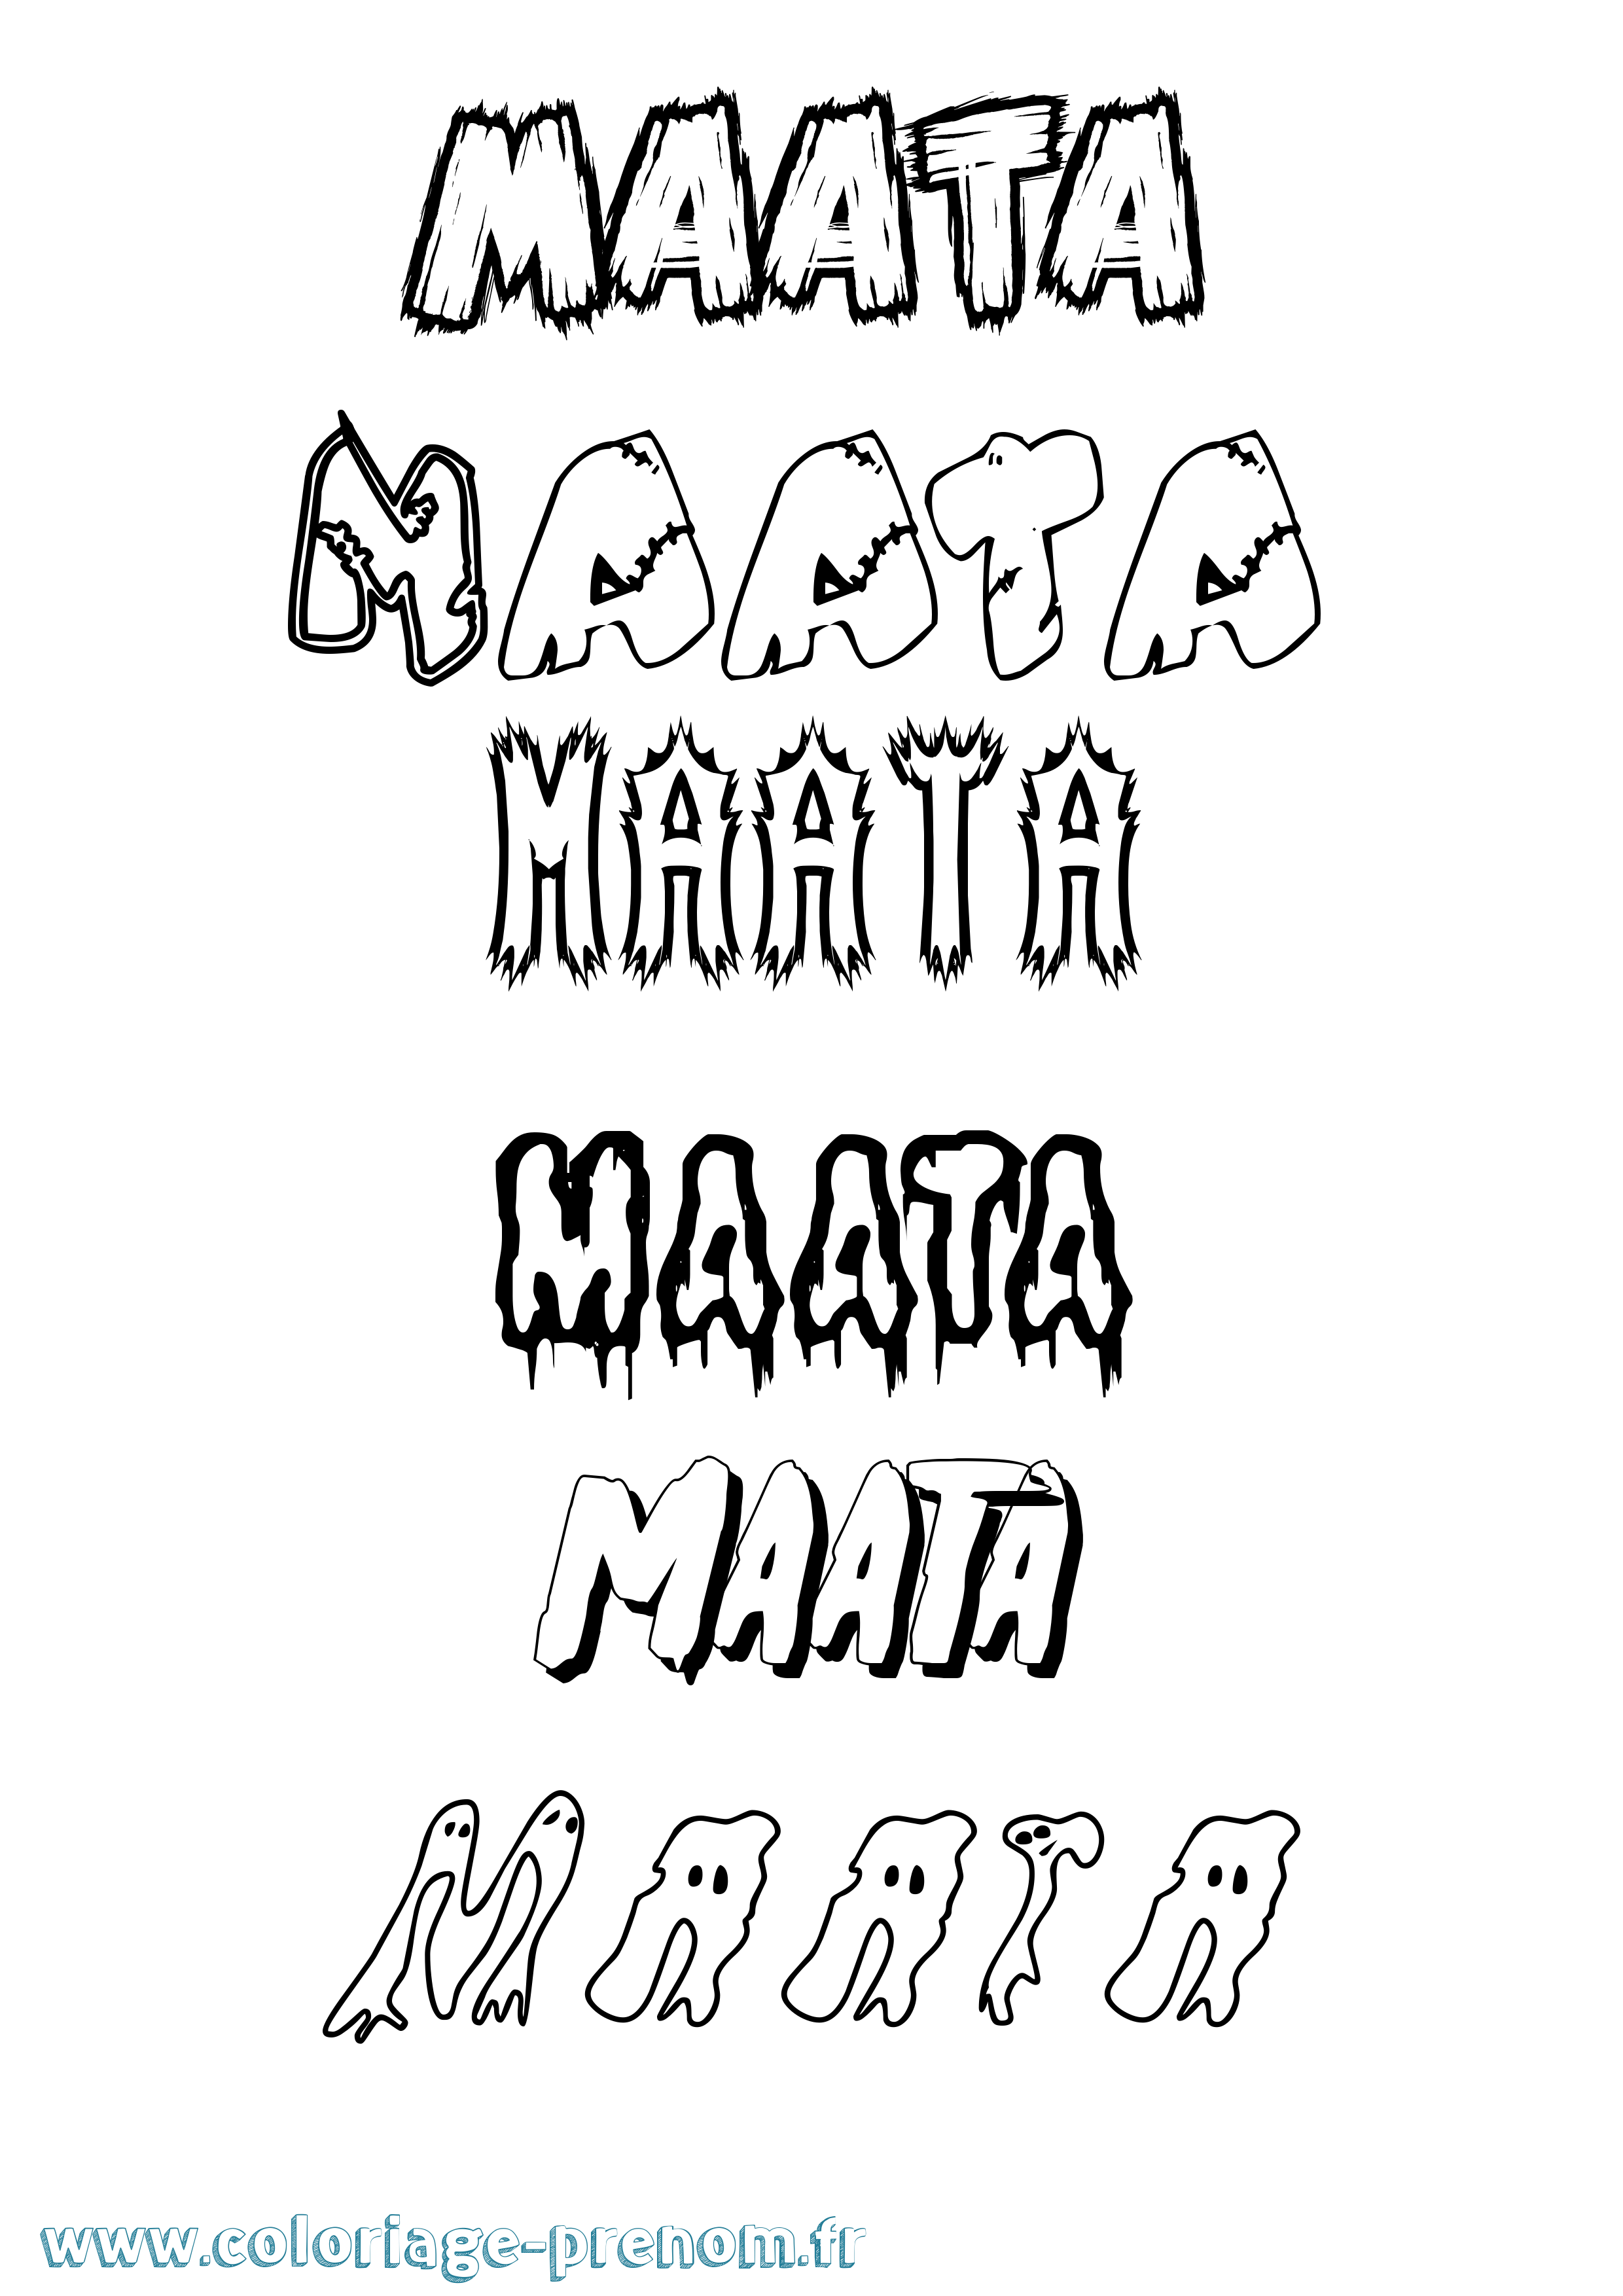 Coloriage prénom Maata Frisson